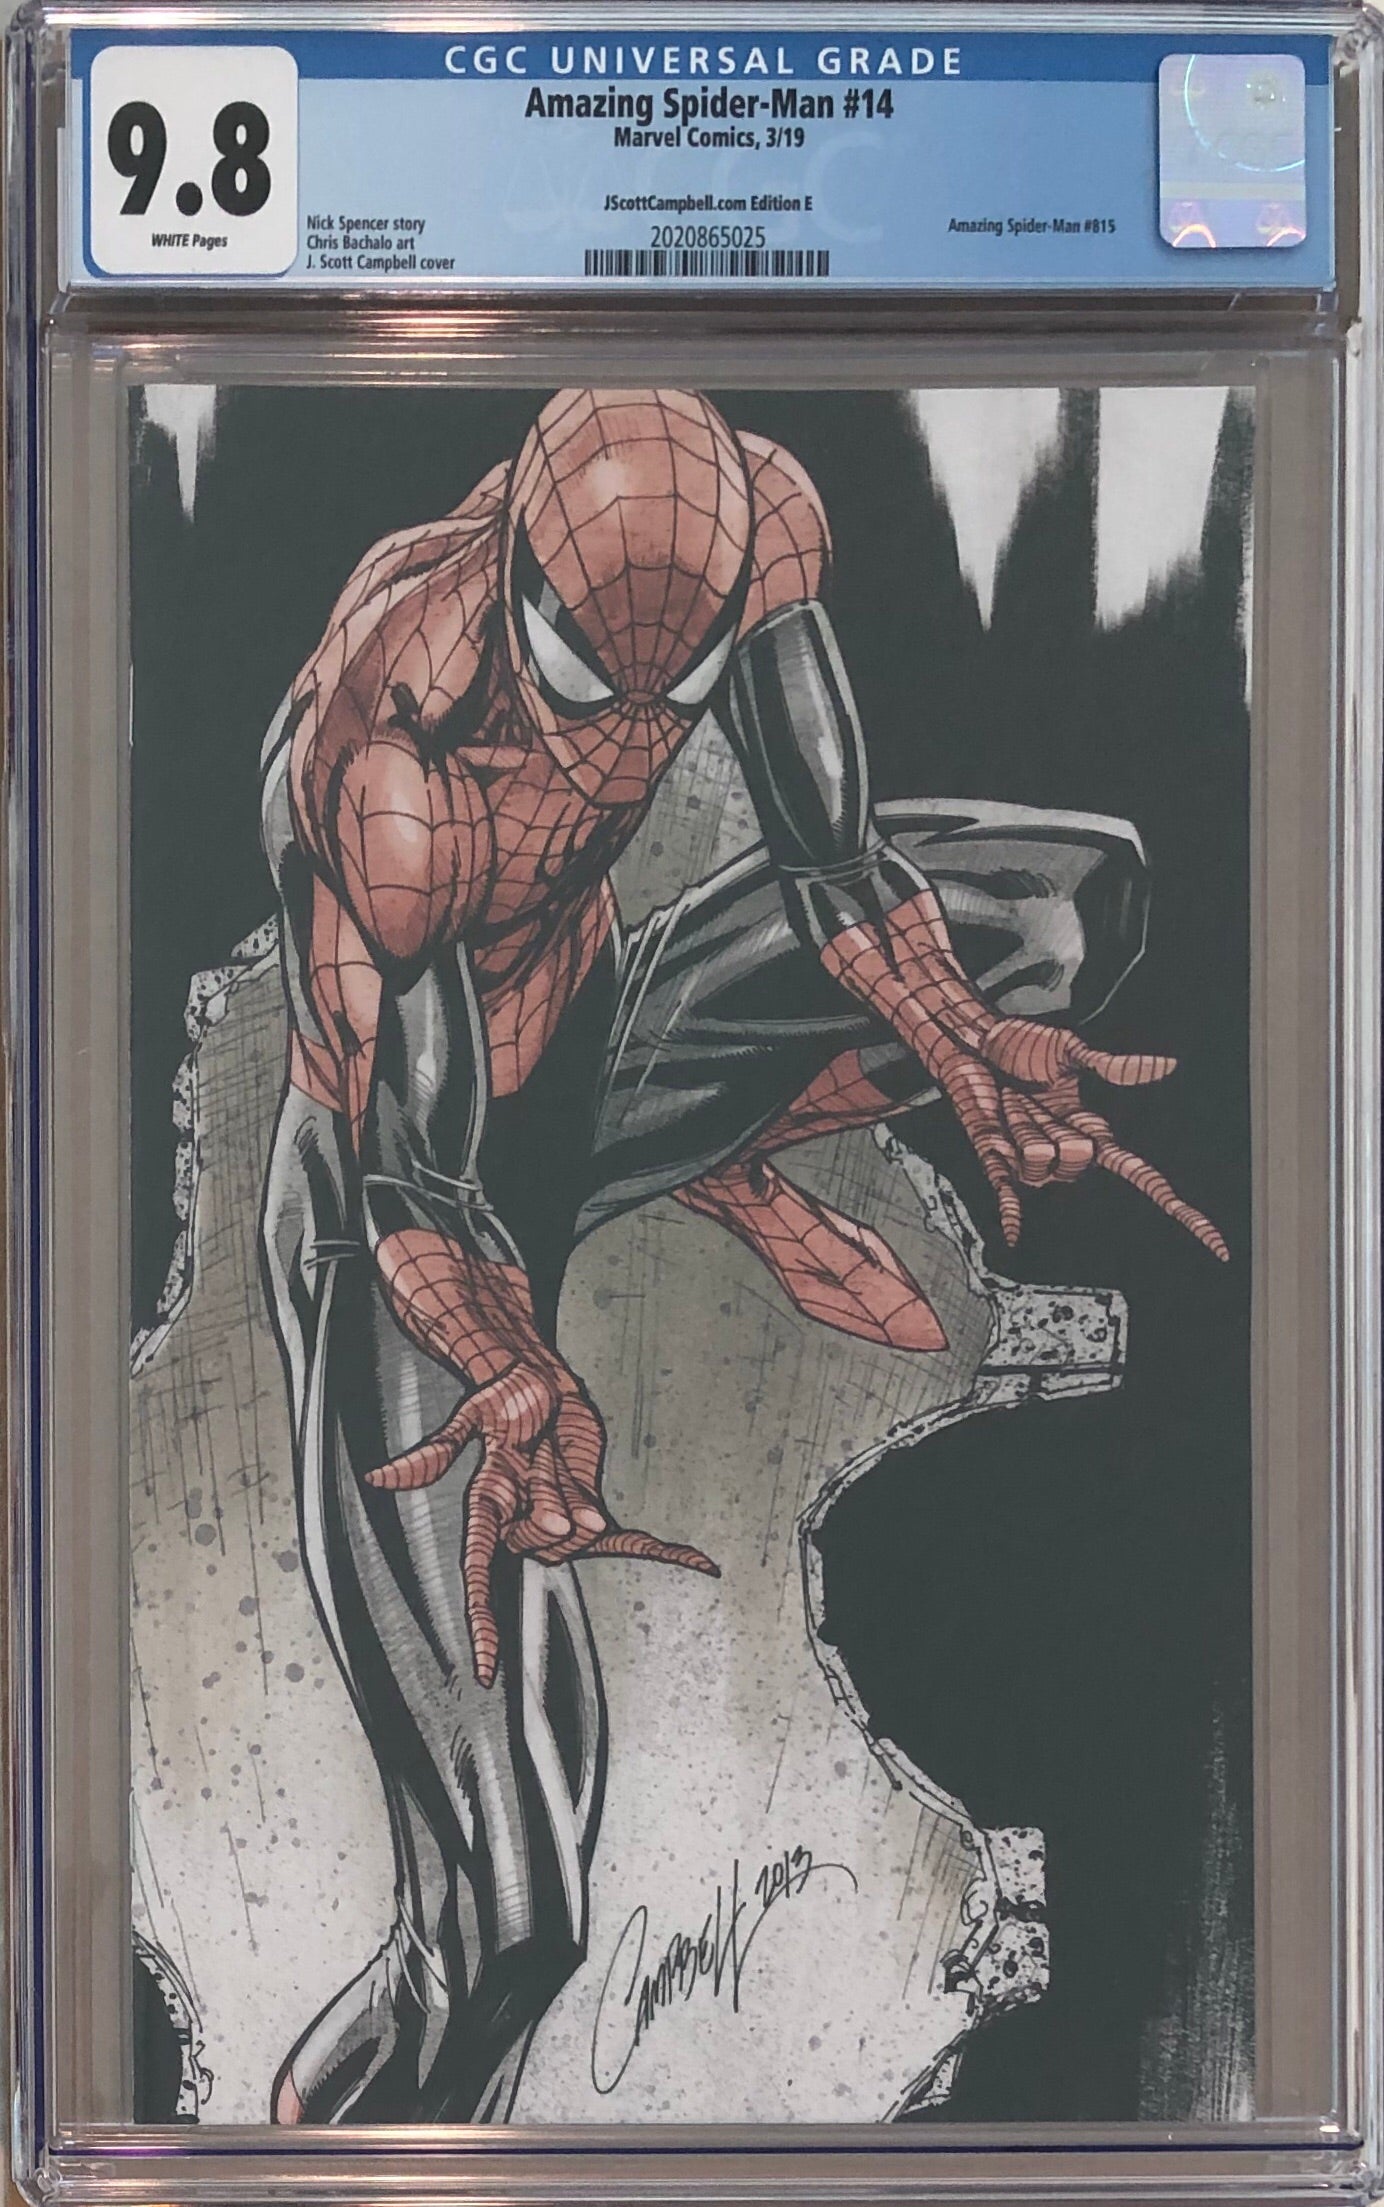 Amazing Spider-Man #14 J. Scott Campbell Edition E "Spider-Man" Virgin Exclusive CGC 9.8